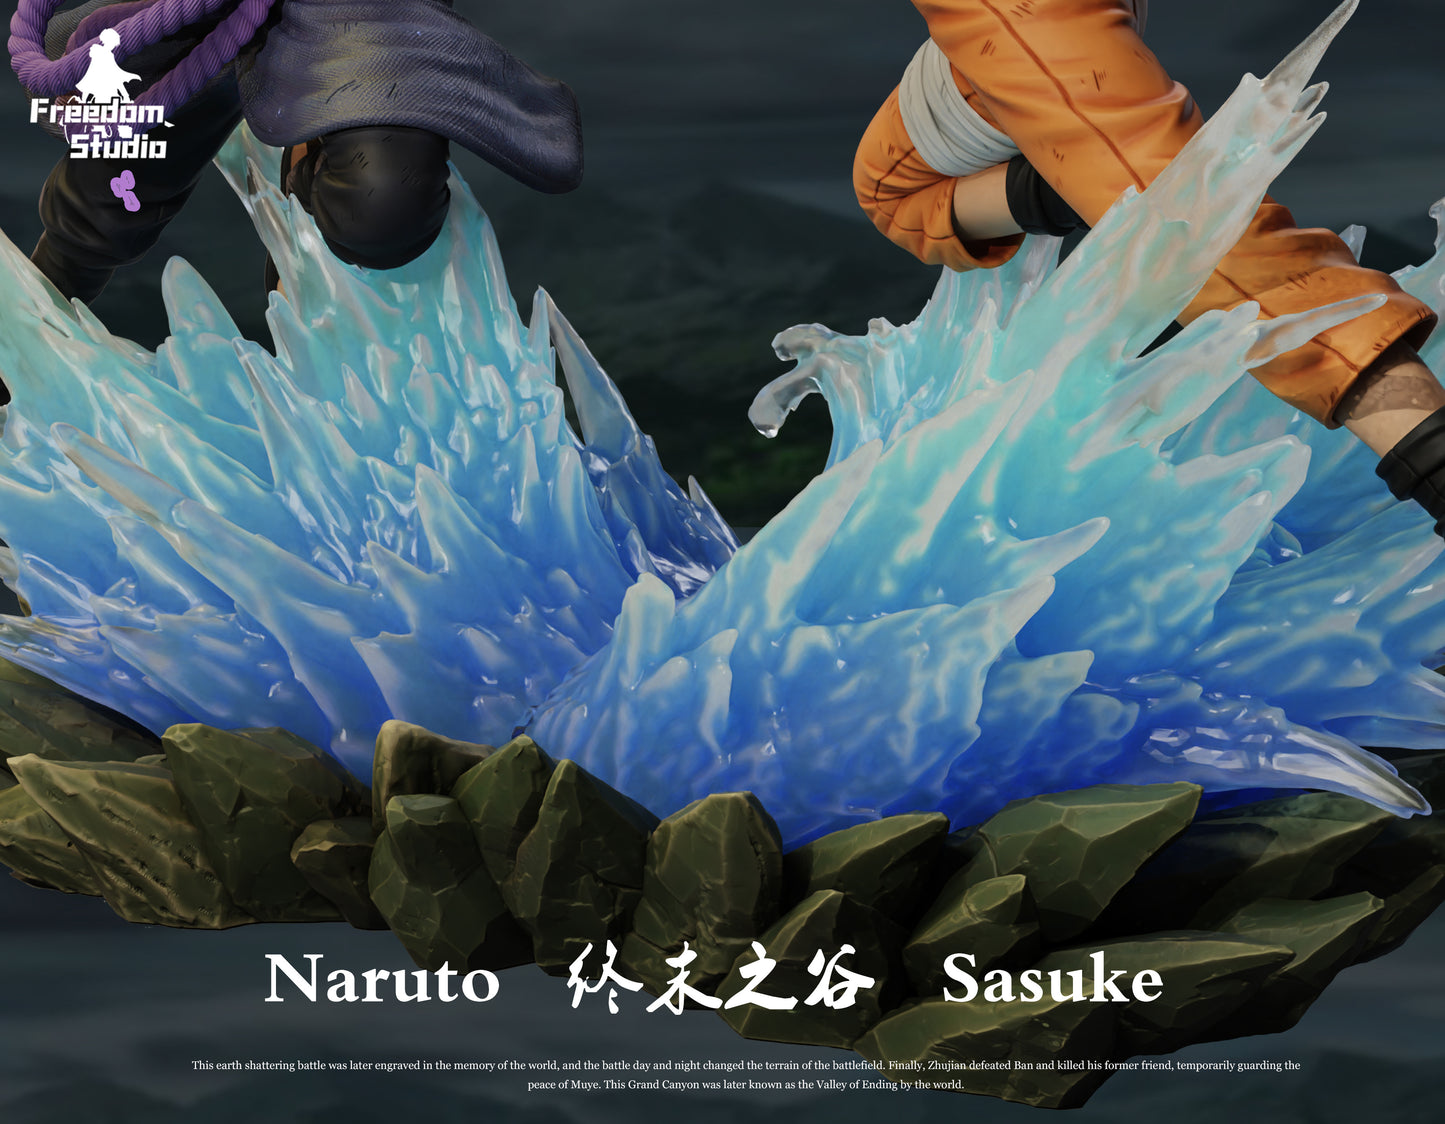 Freedom - Sasuke vs Naruto